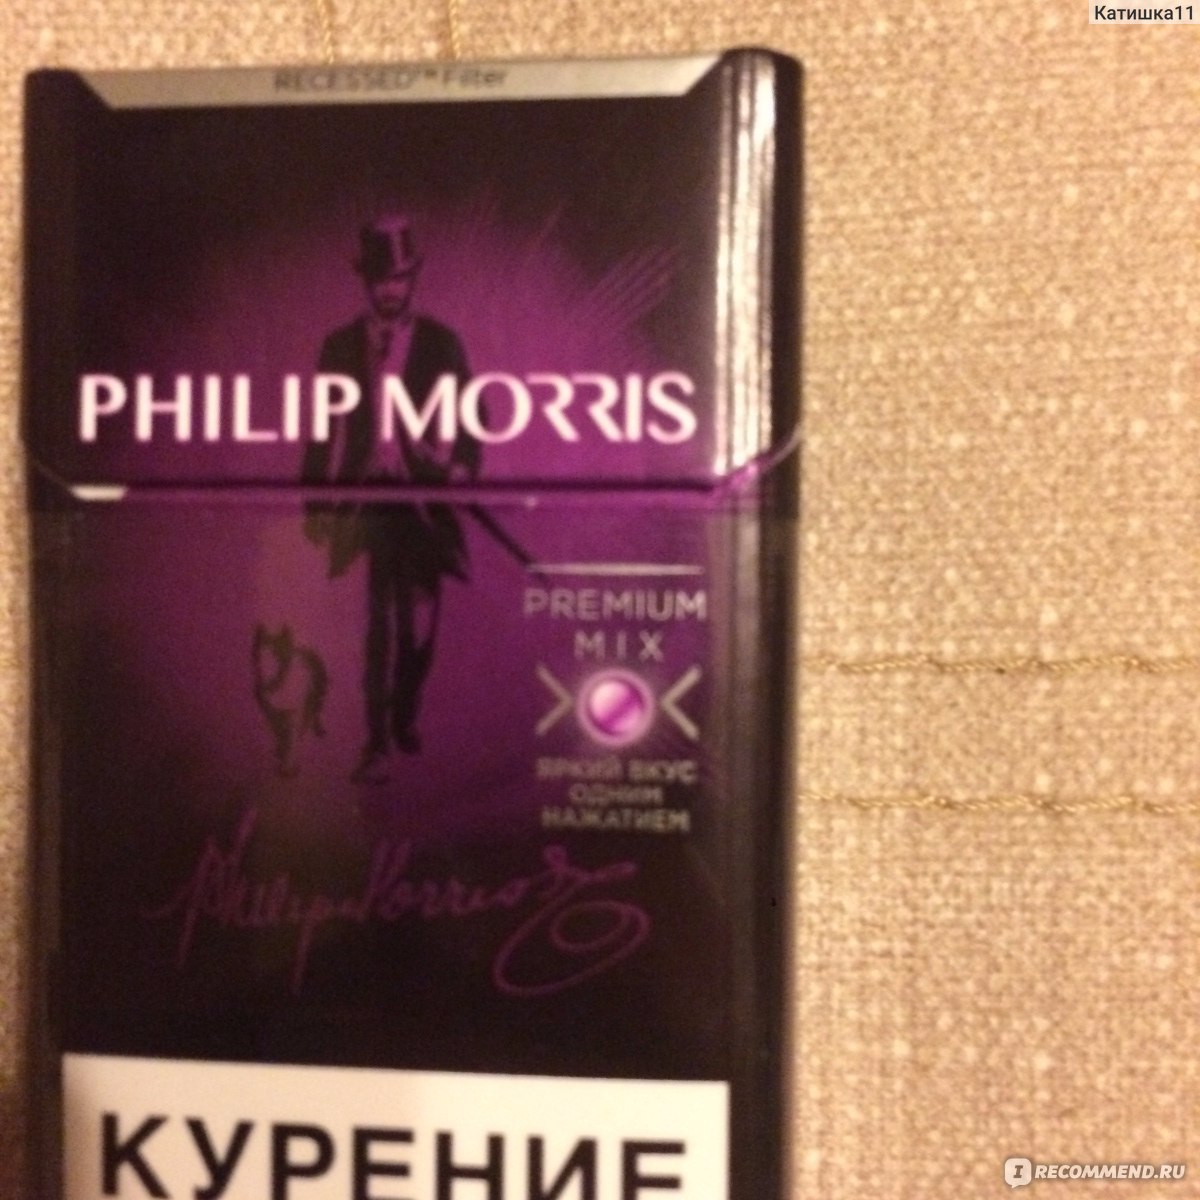 Филип моррис фиолетовый. Сигареты Филип Моррис с кнопкой. Сигареты Филип Моррис с кнопкой фиолетовой.